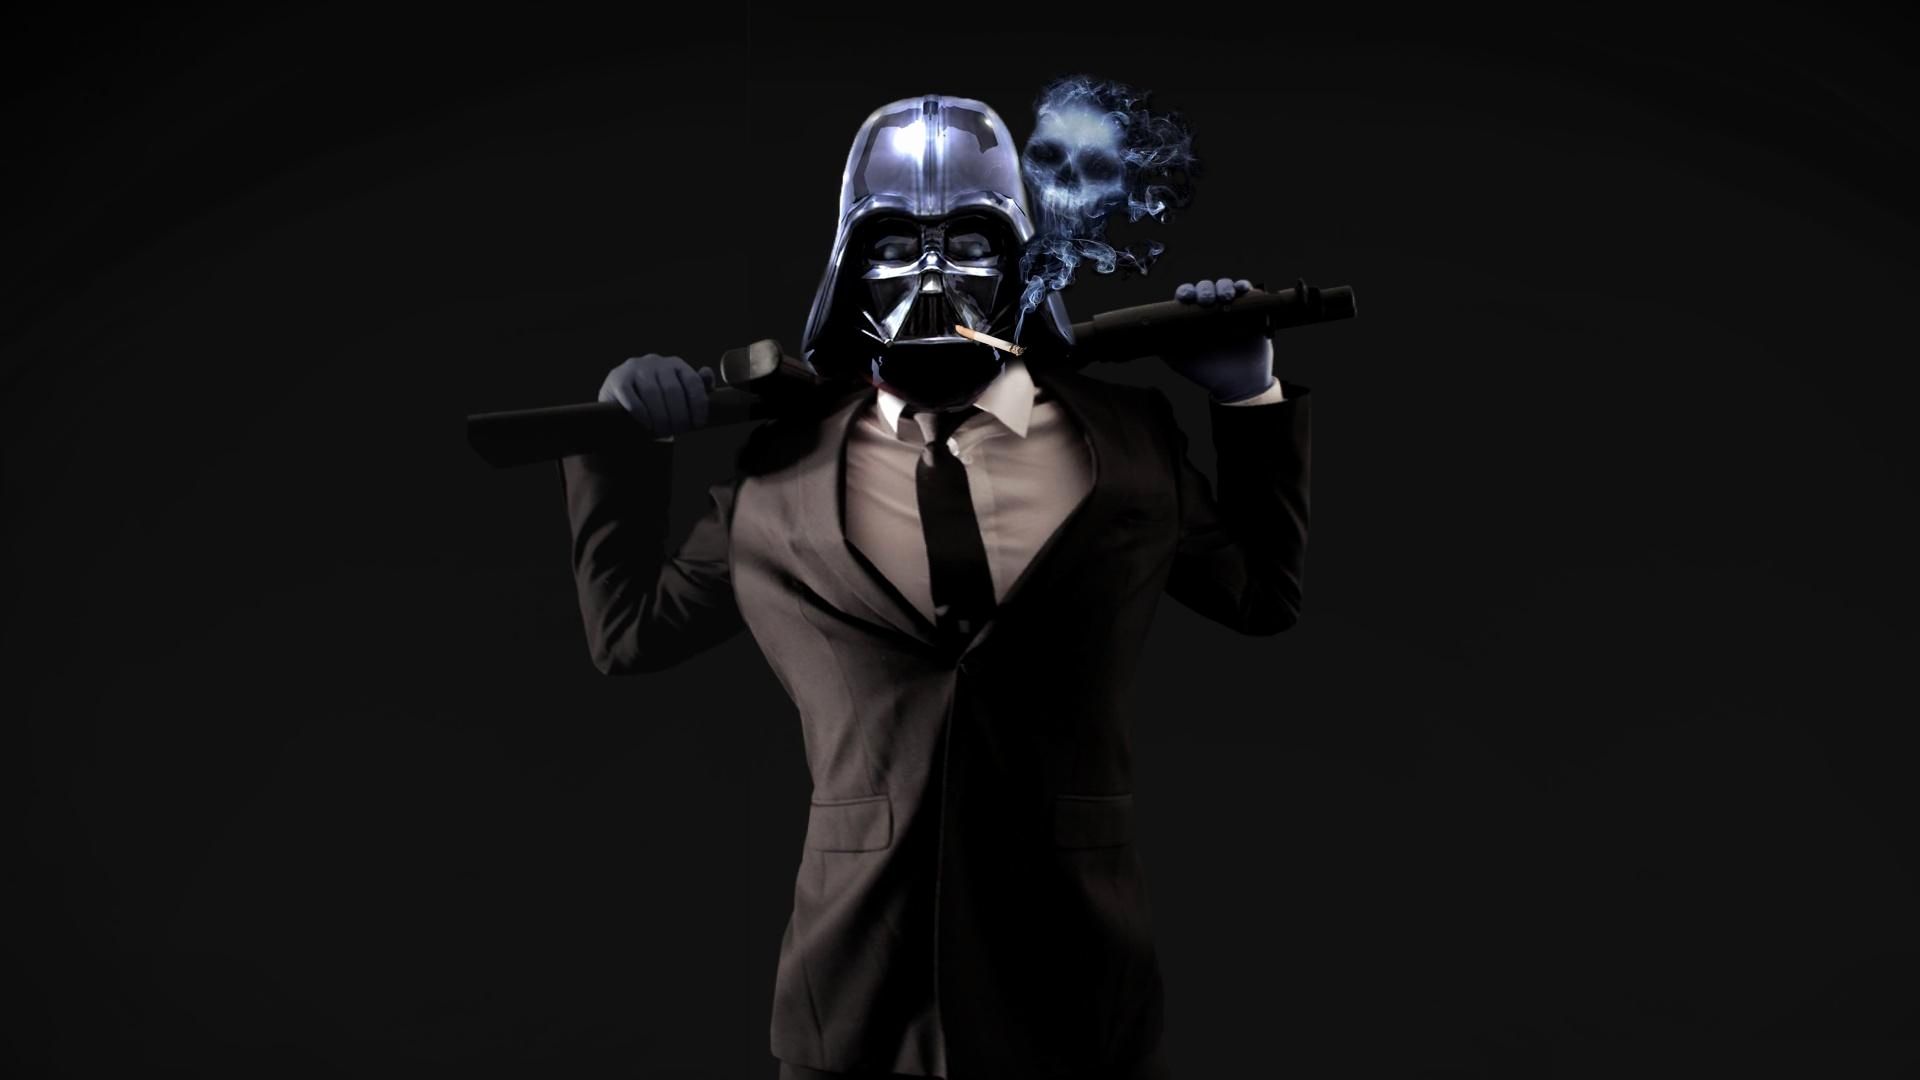 Darth Vader Screensaver Luxury Desktop Darth Vader Wallpaper Of the Day of The Hudson